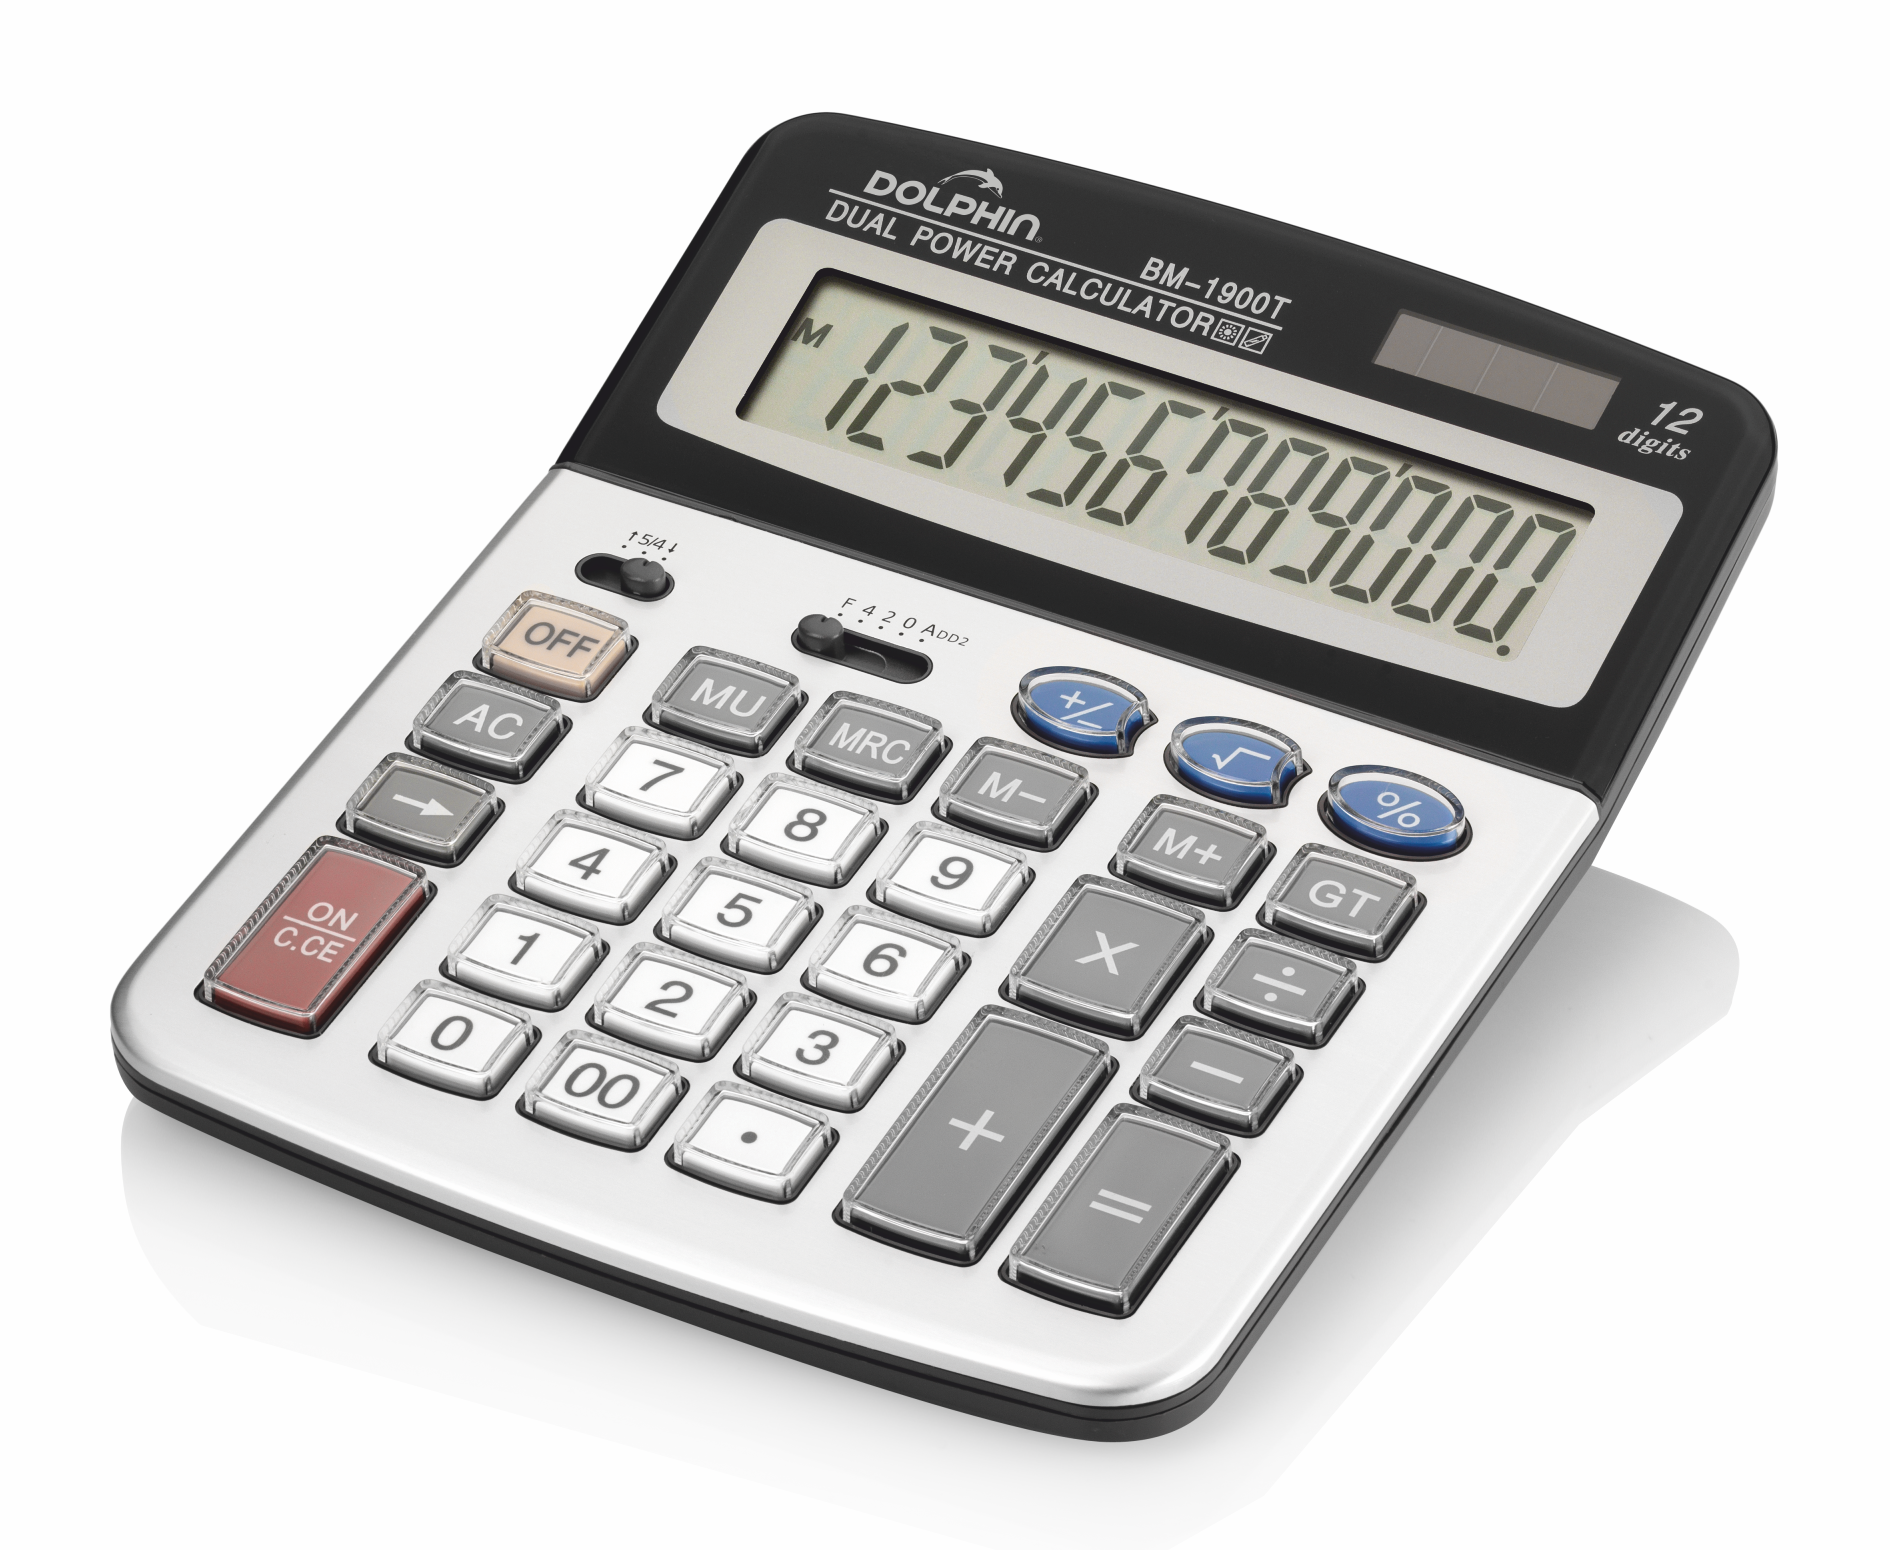 1900 t. Dolphin калькулятор BM 1900 T. Калькулятор Dolphin Electronic calculator-1800. Dolphin калькулятор BM 190 T. Блокнот с калькулятором.